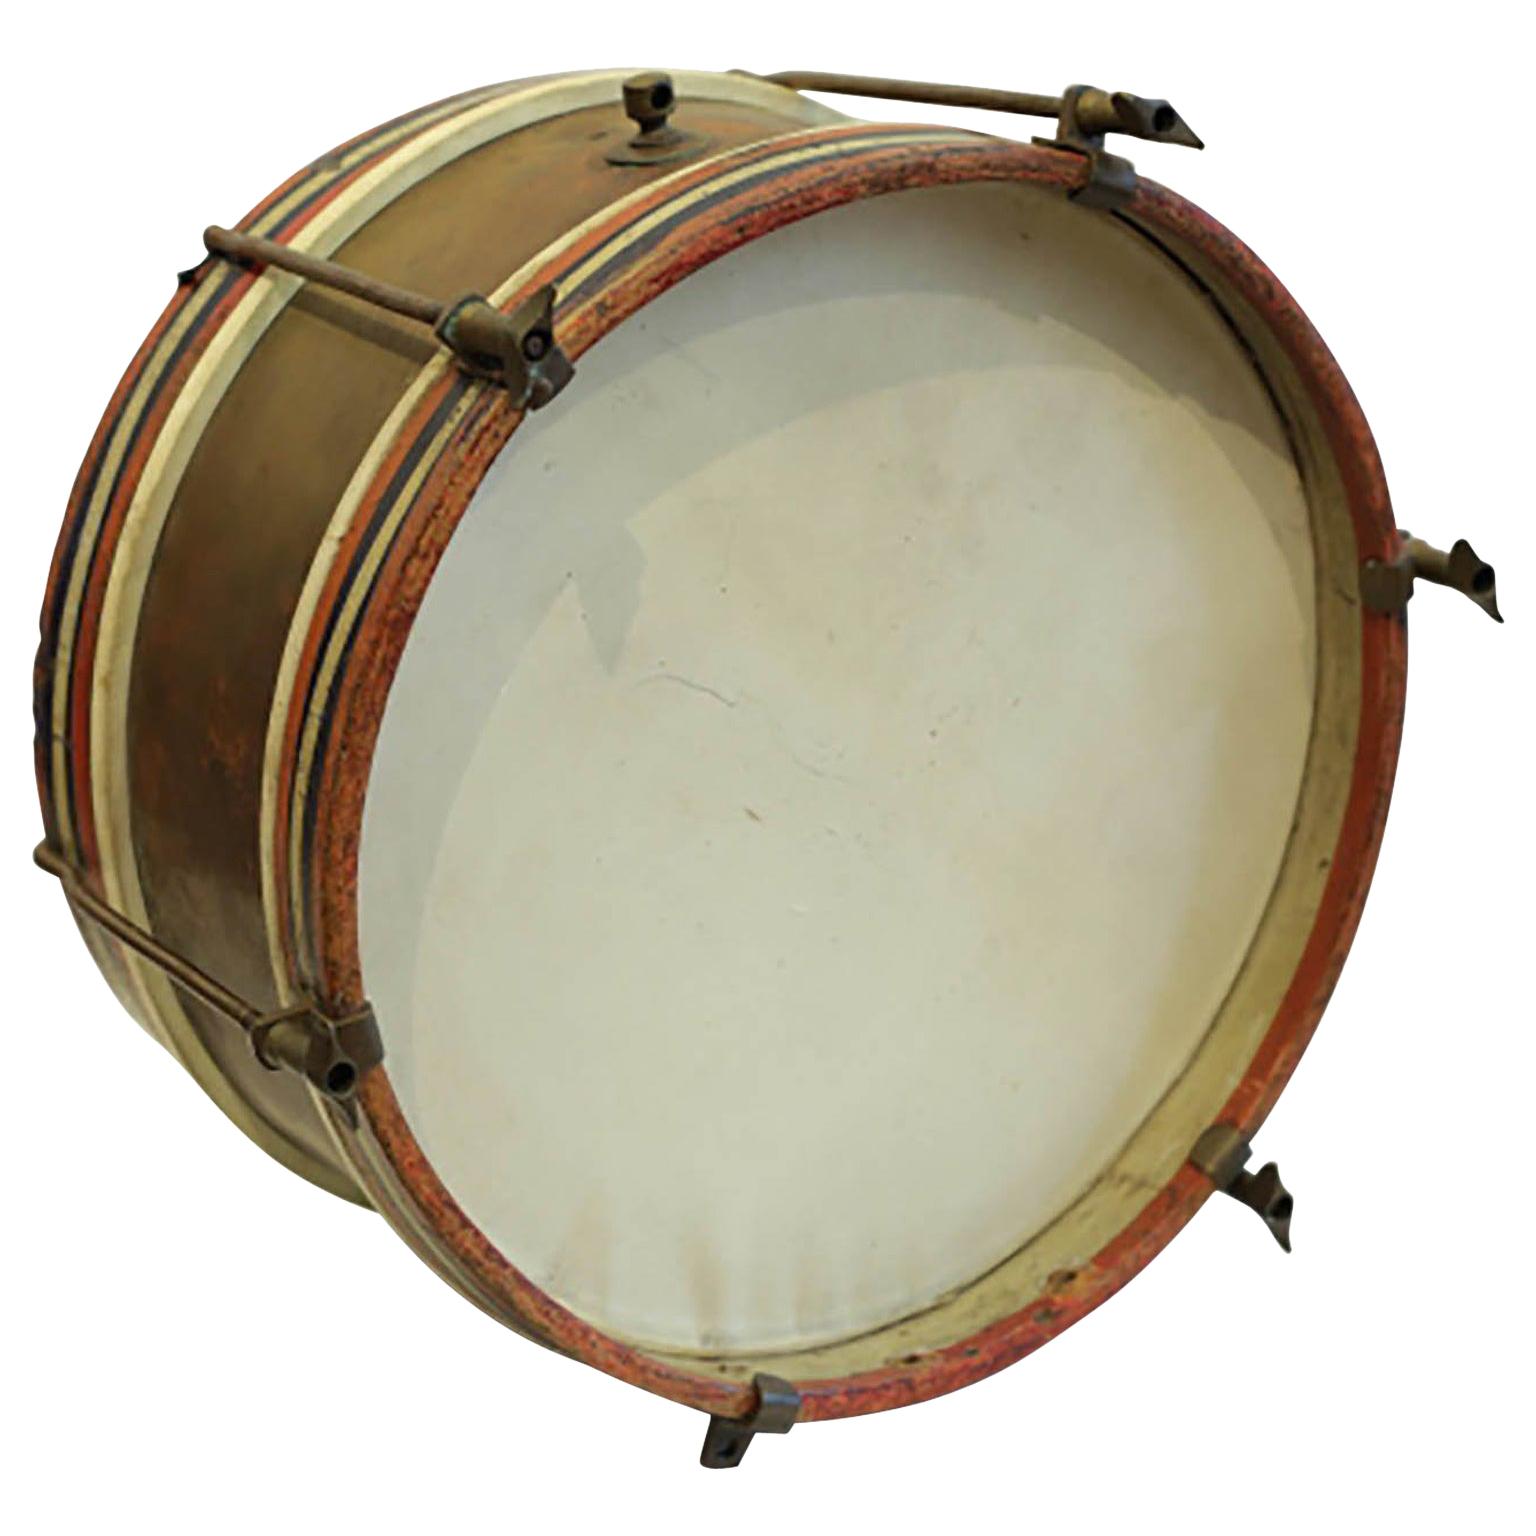 Antique Calfskin Snare Drum, circa 1920-1940s